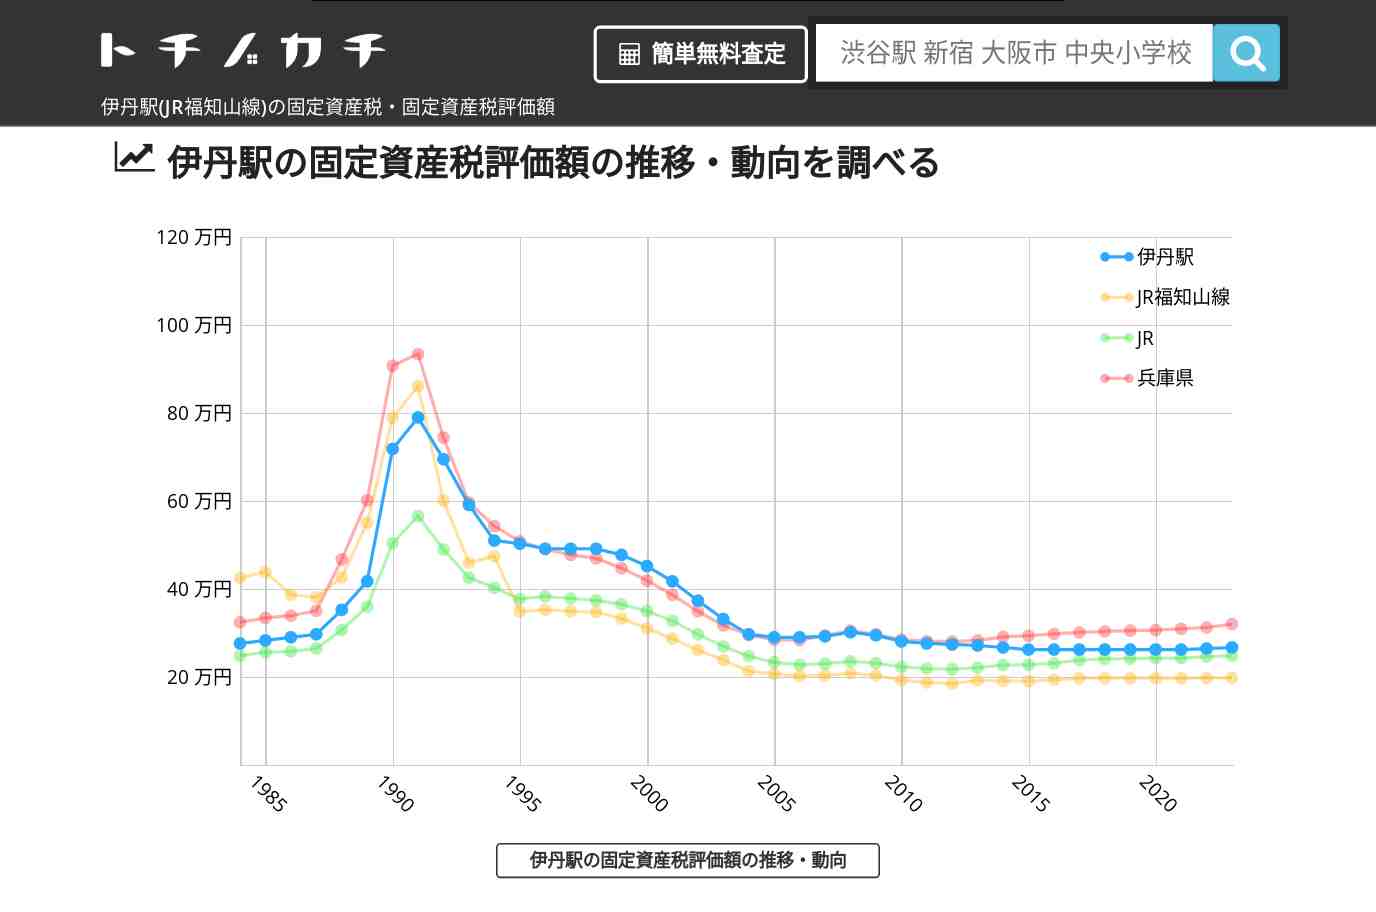 伊丹駅(JR福知山線)の固定資産税・固定資産税評価額 | トチノカチ